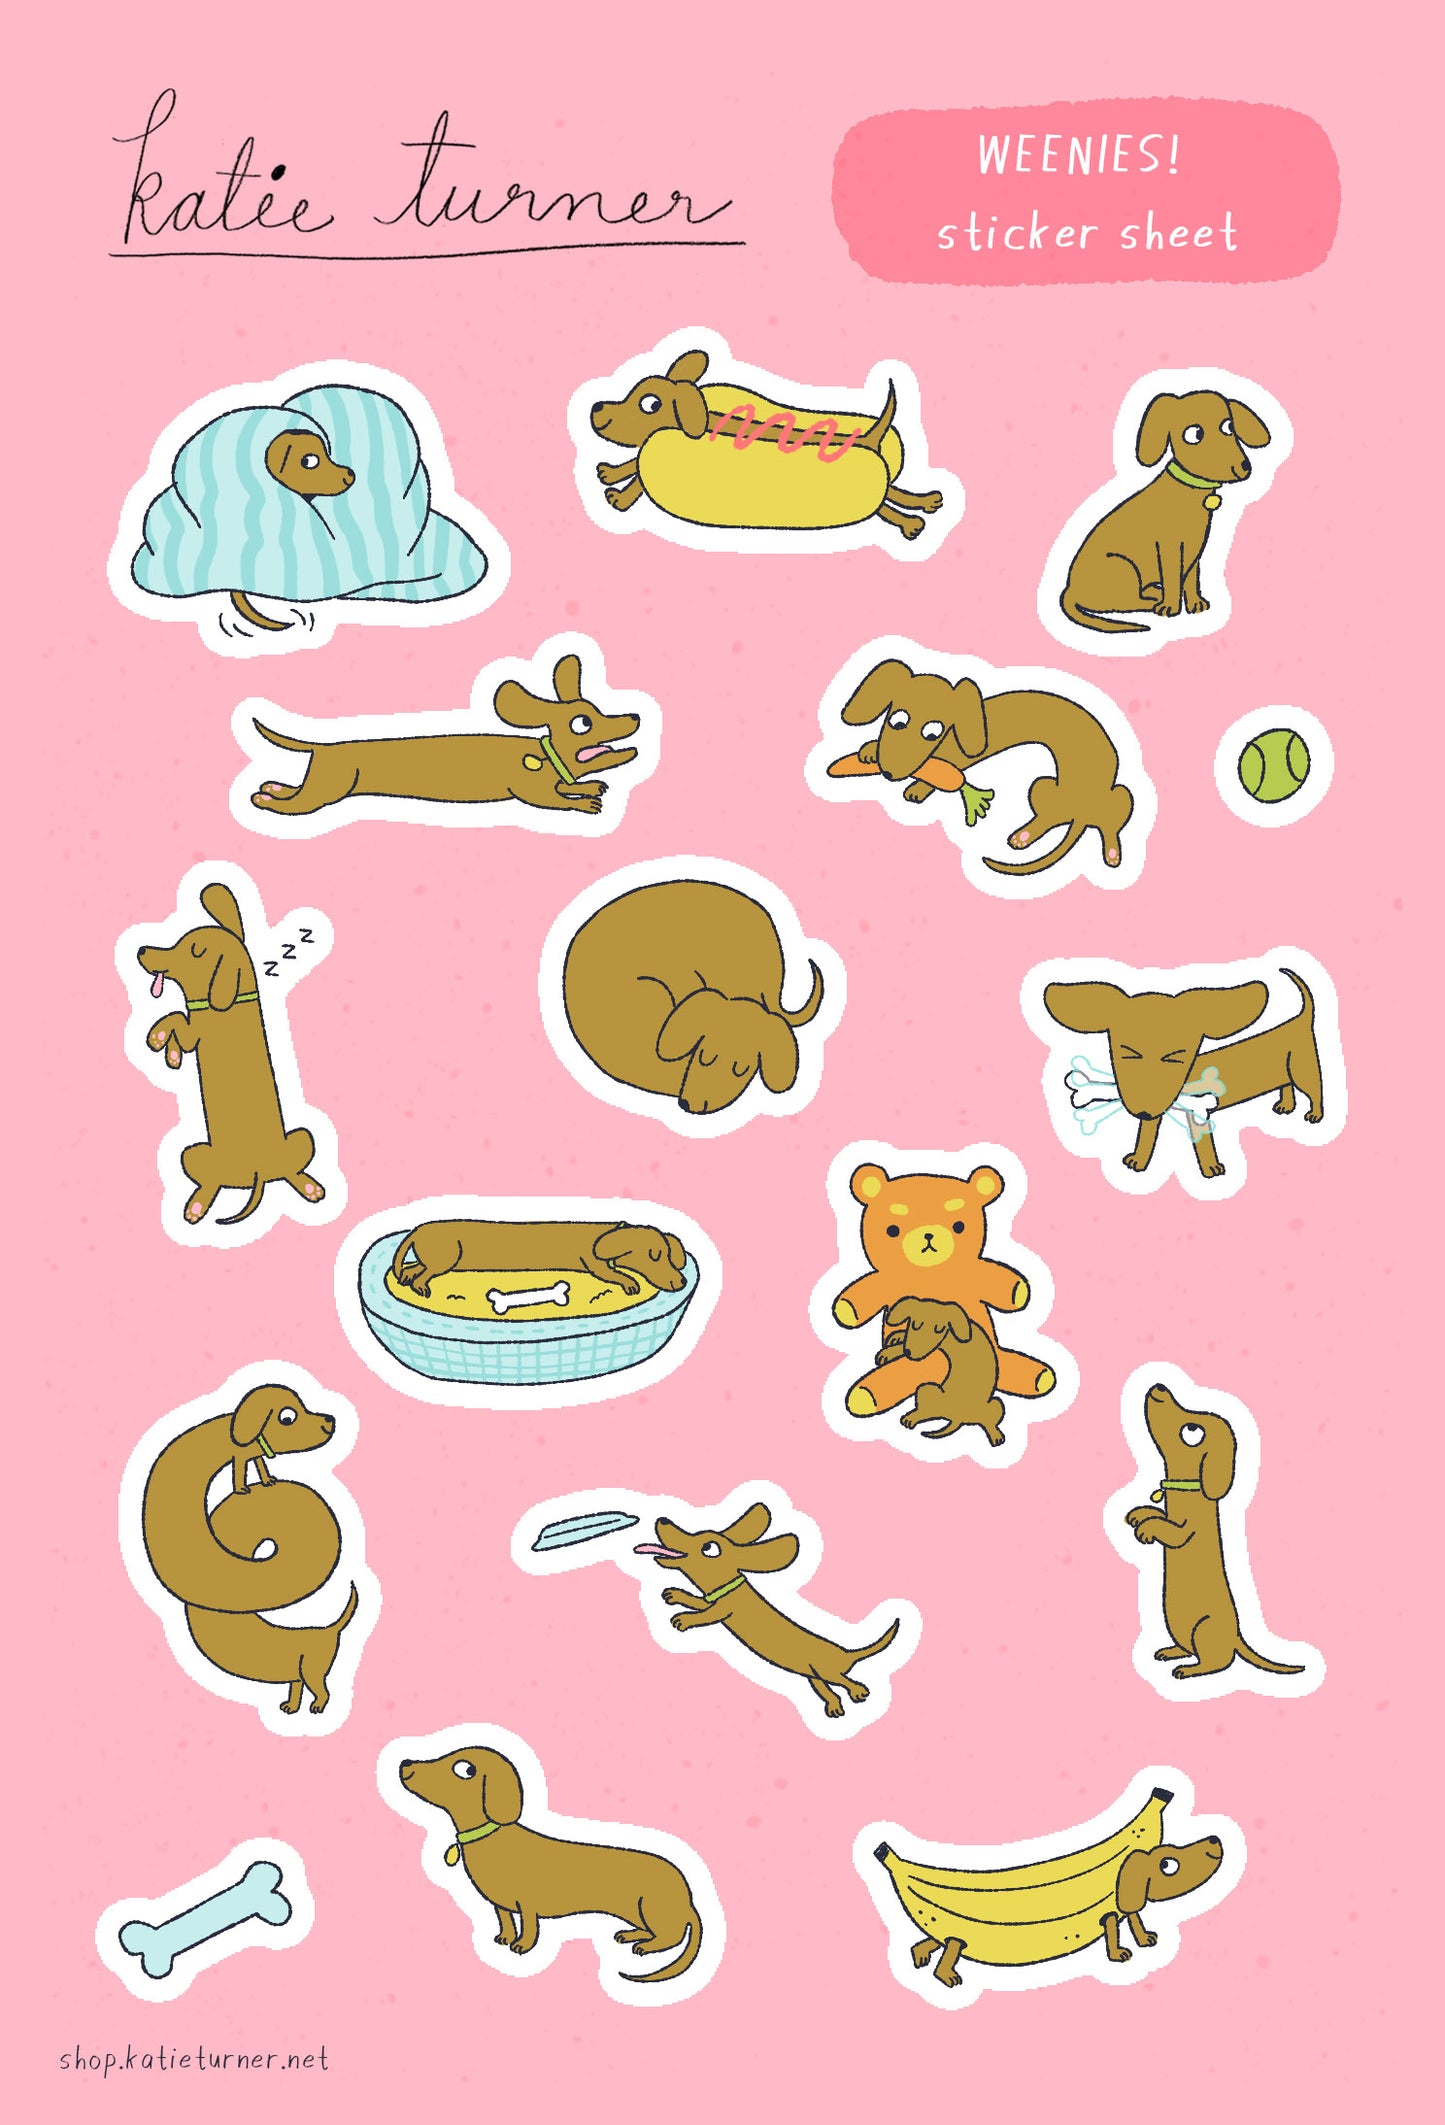 Weenies! Sticker Sheet